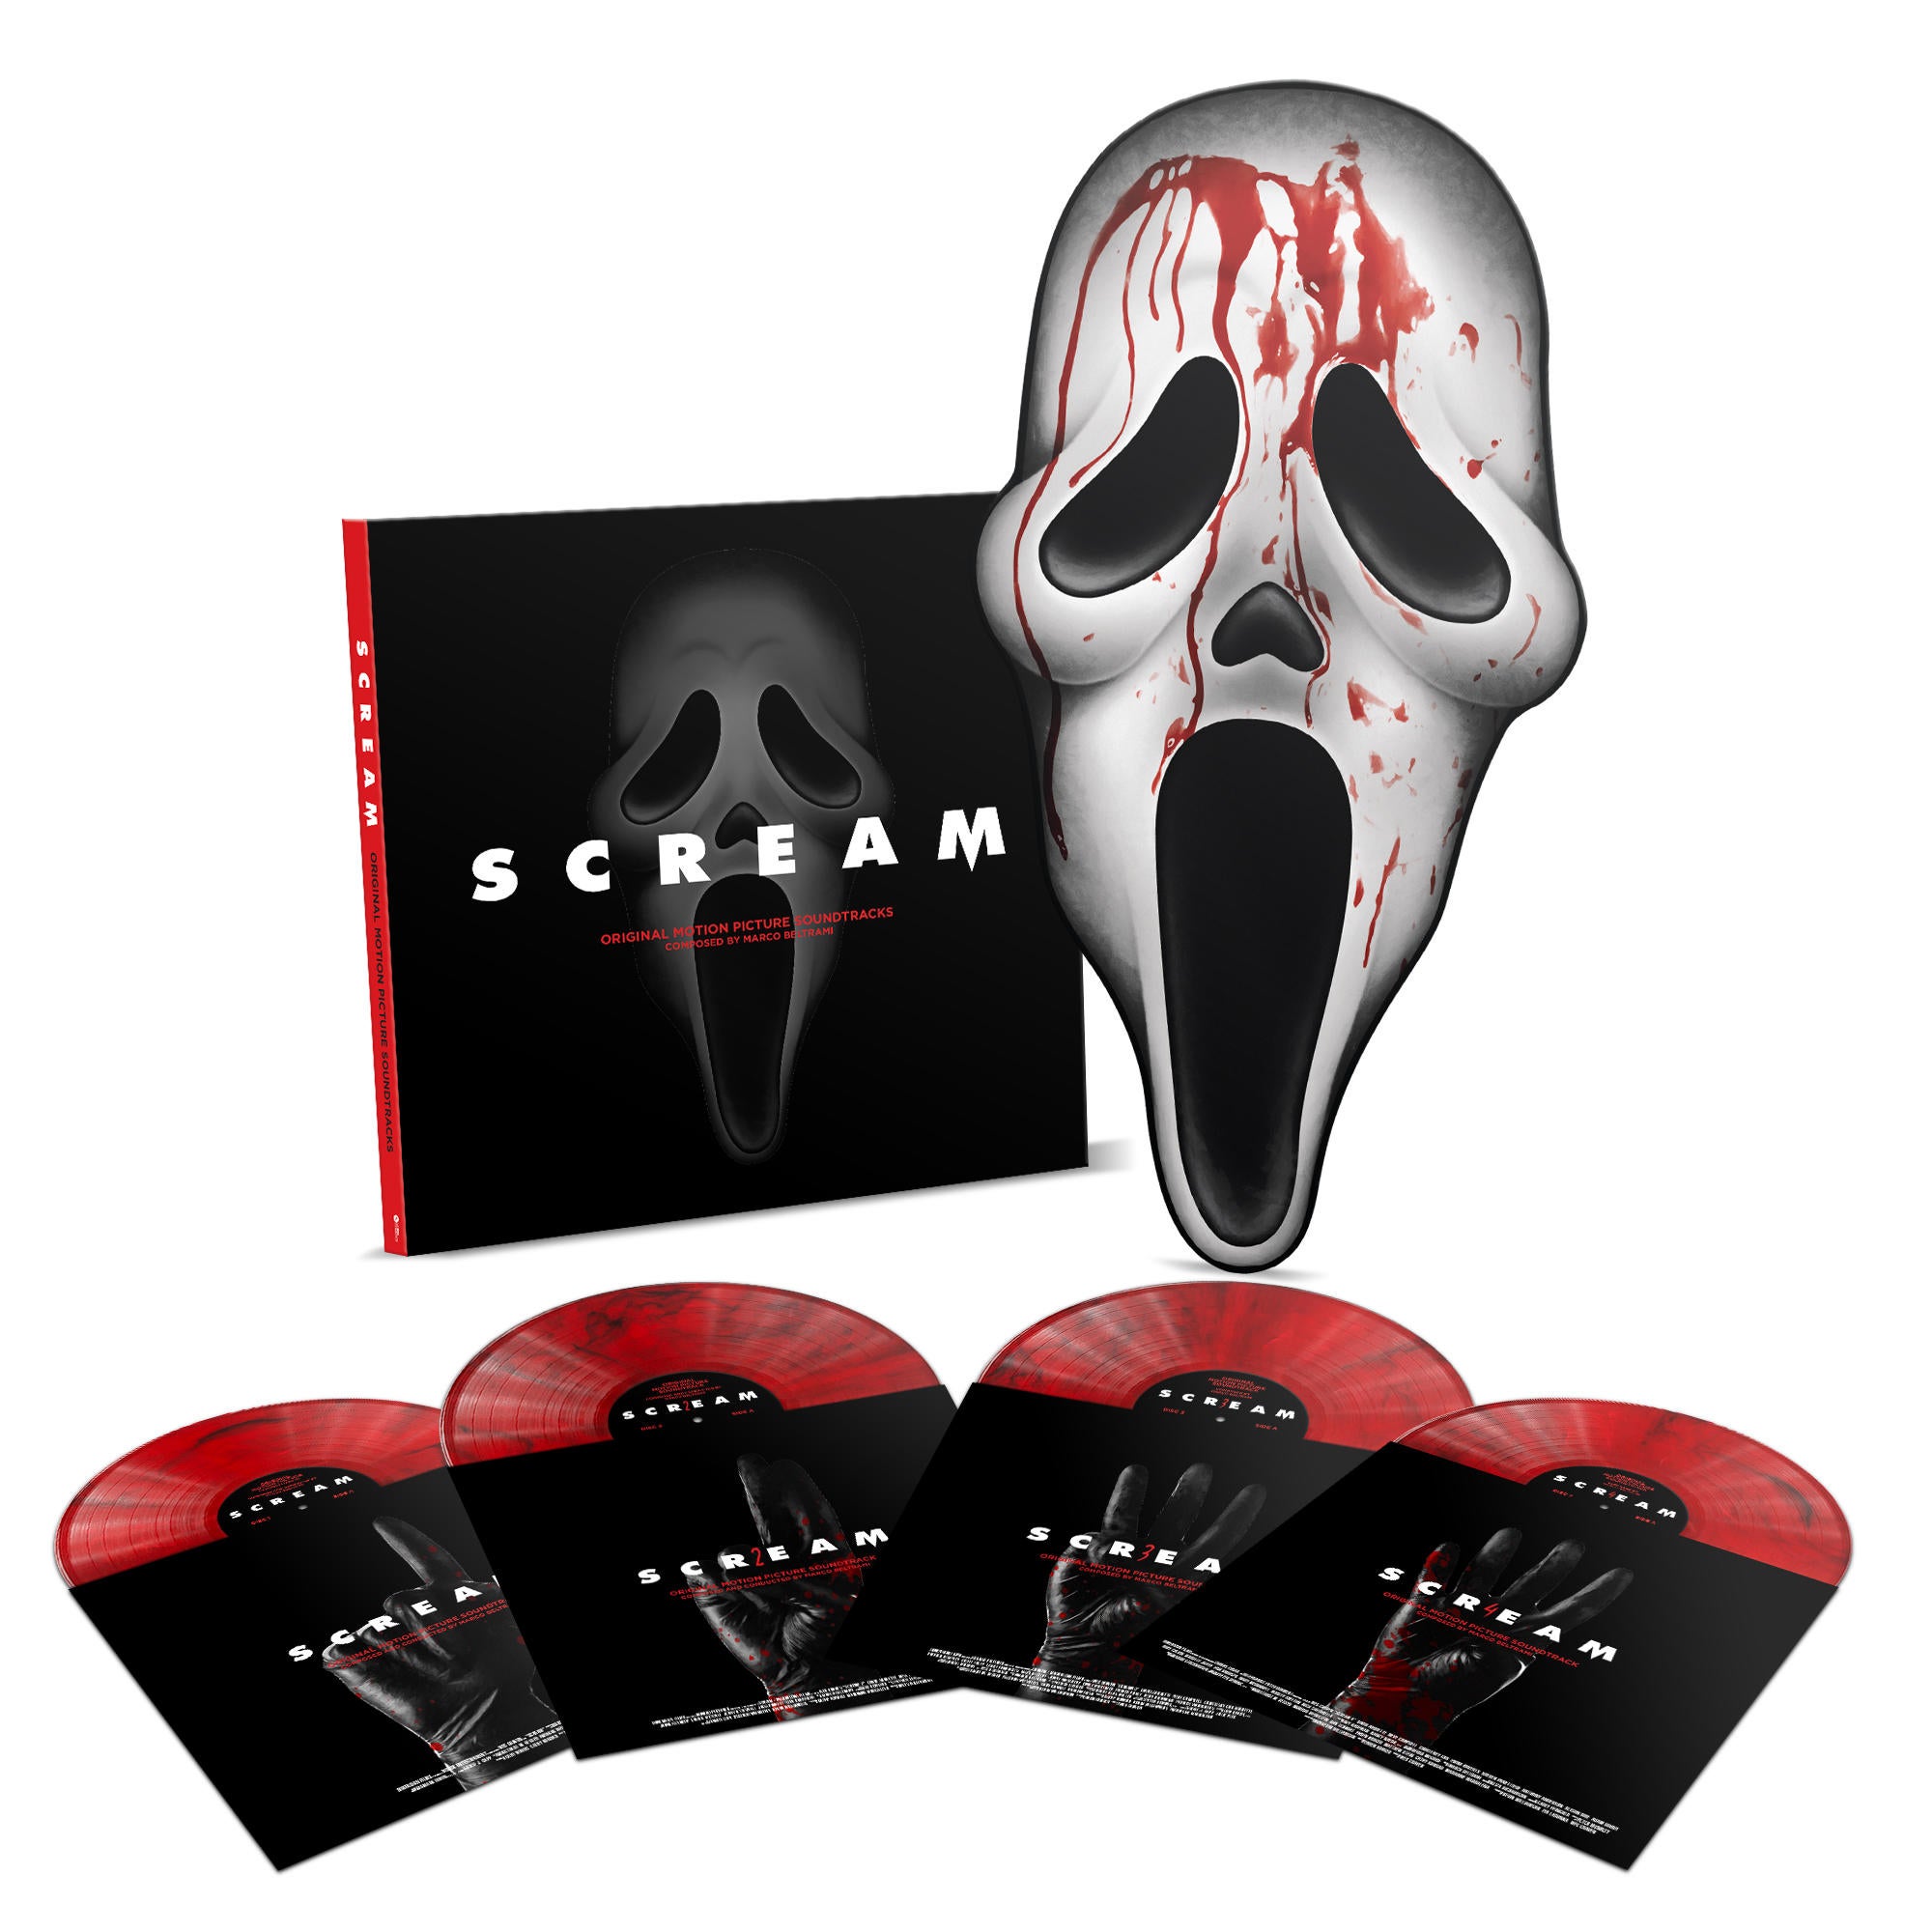 scream-movie-franchise-soundtrack-vinyl-records.jpg